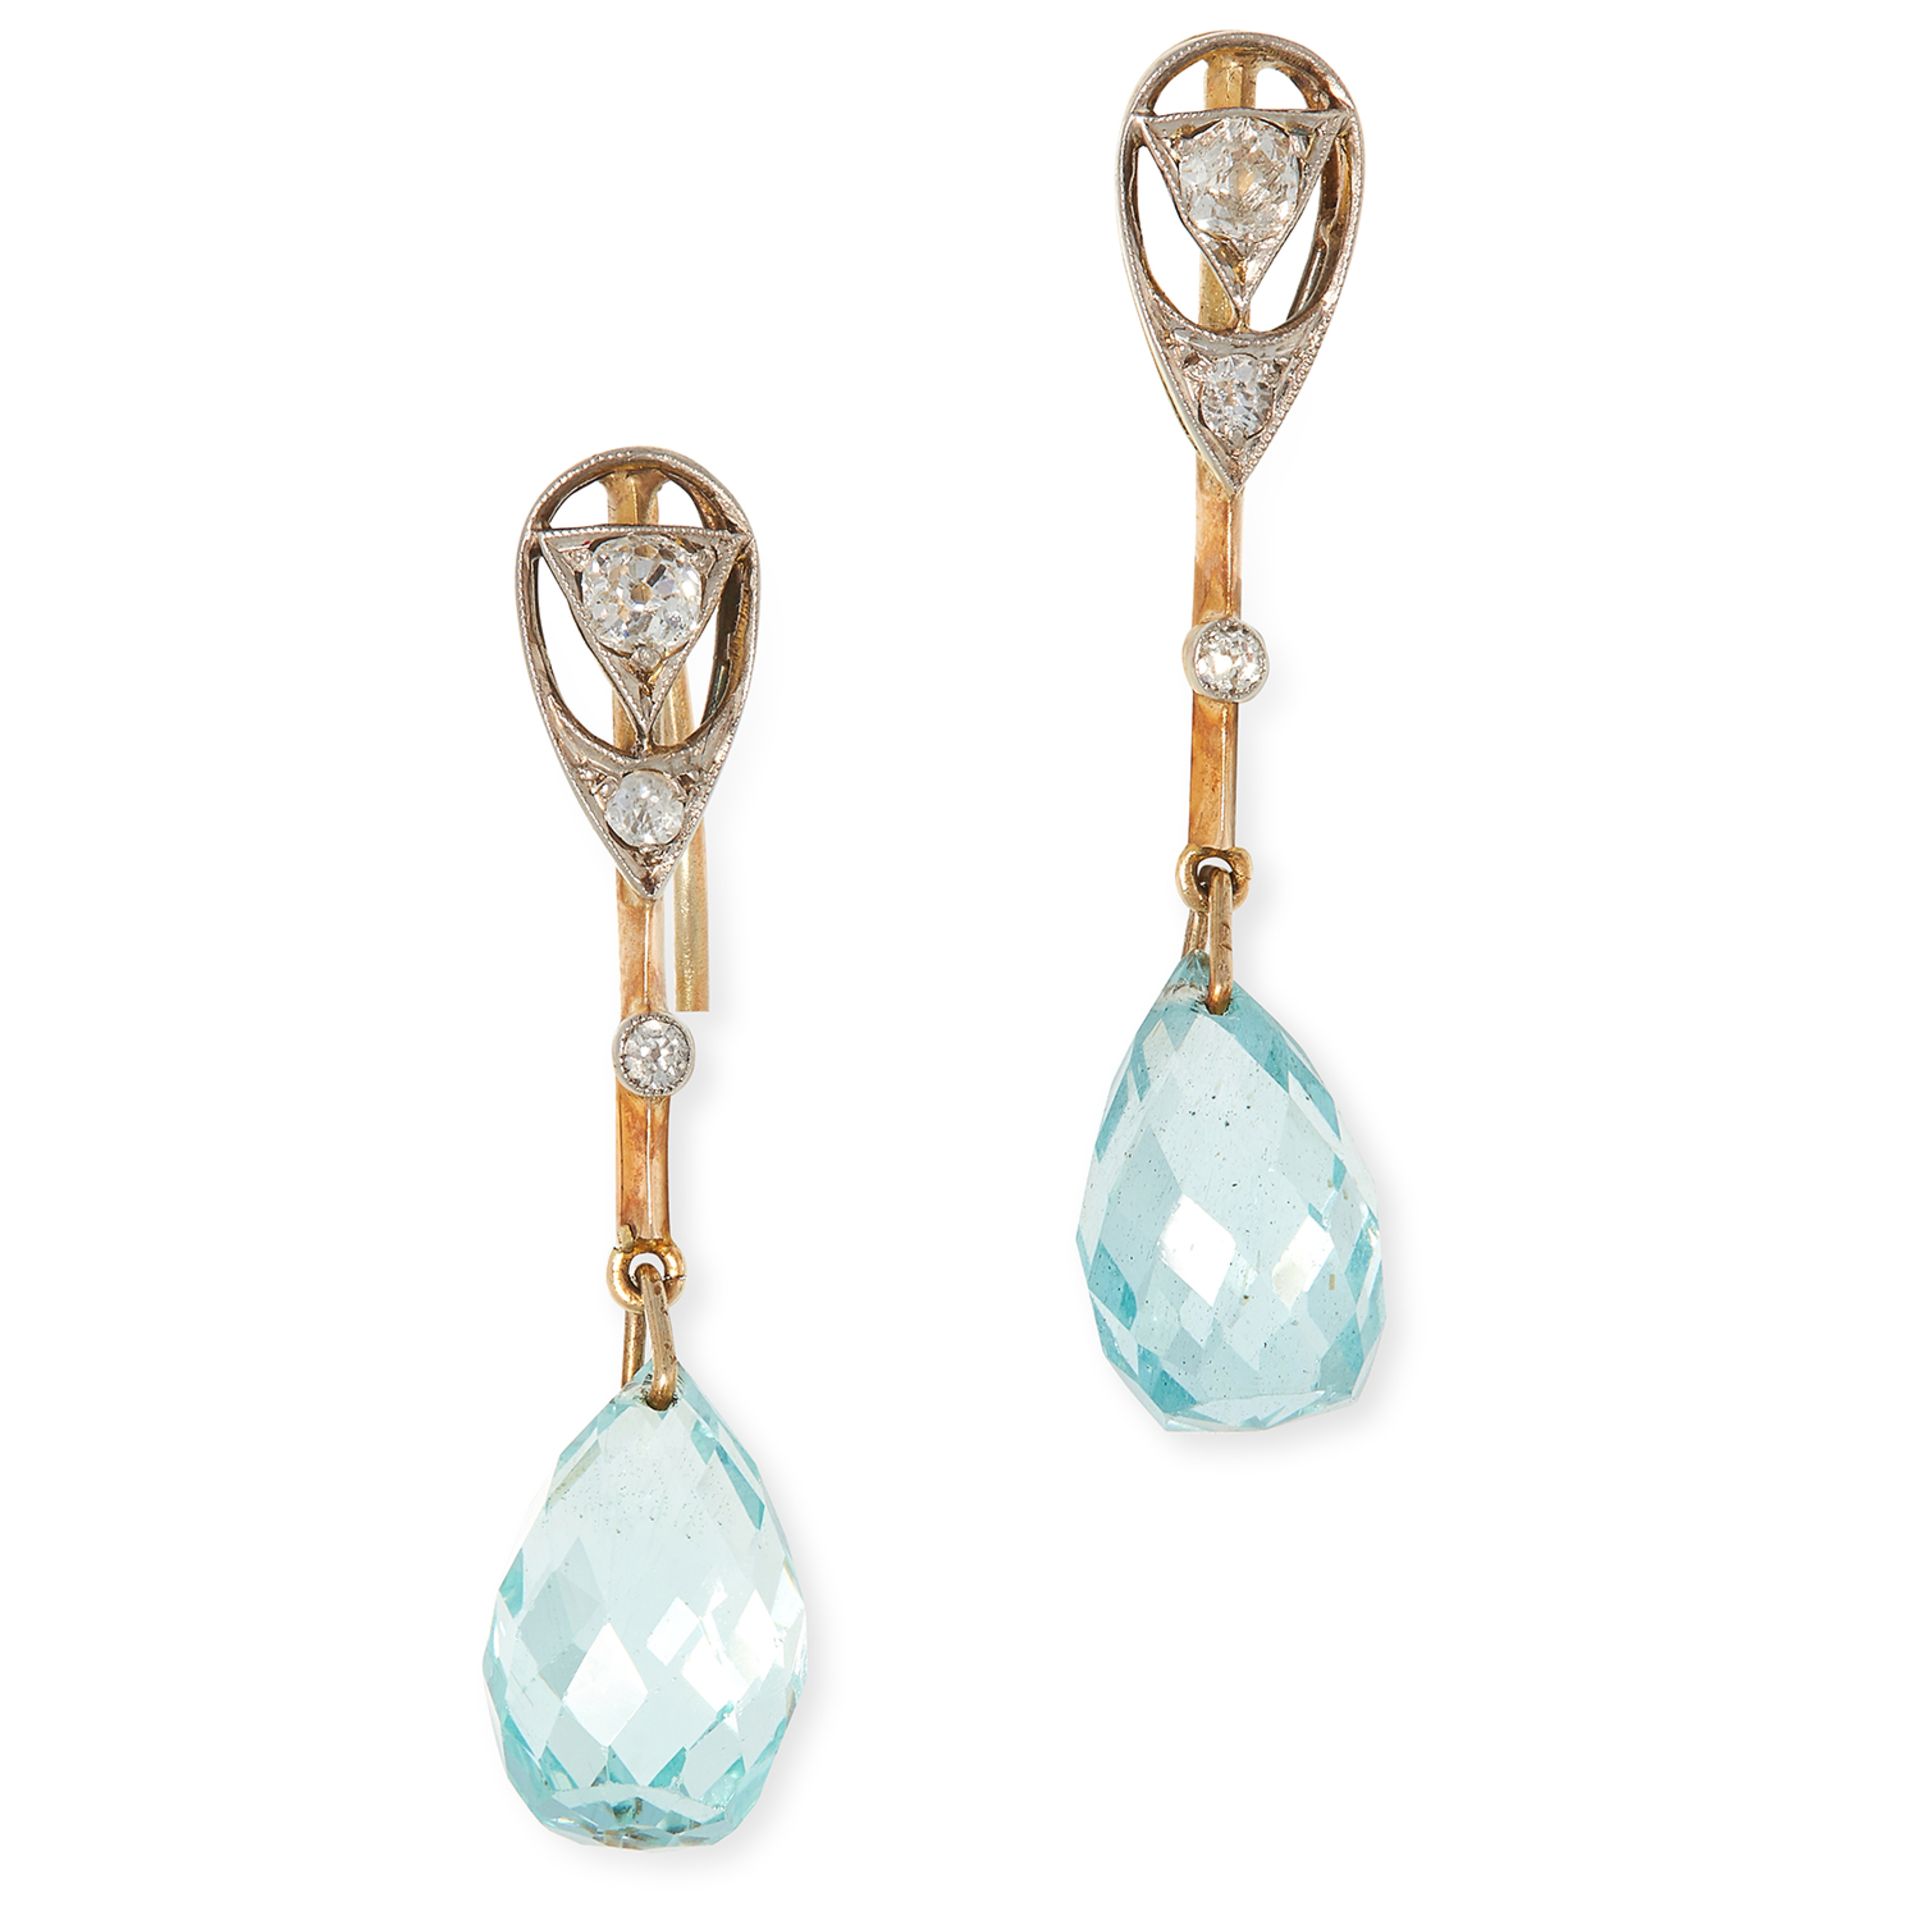 AQUAMARINE AND DIAMOND EARRINGS each set with a row of old cut diamonds suspending an aquamarine